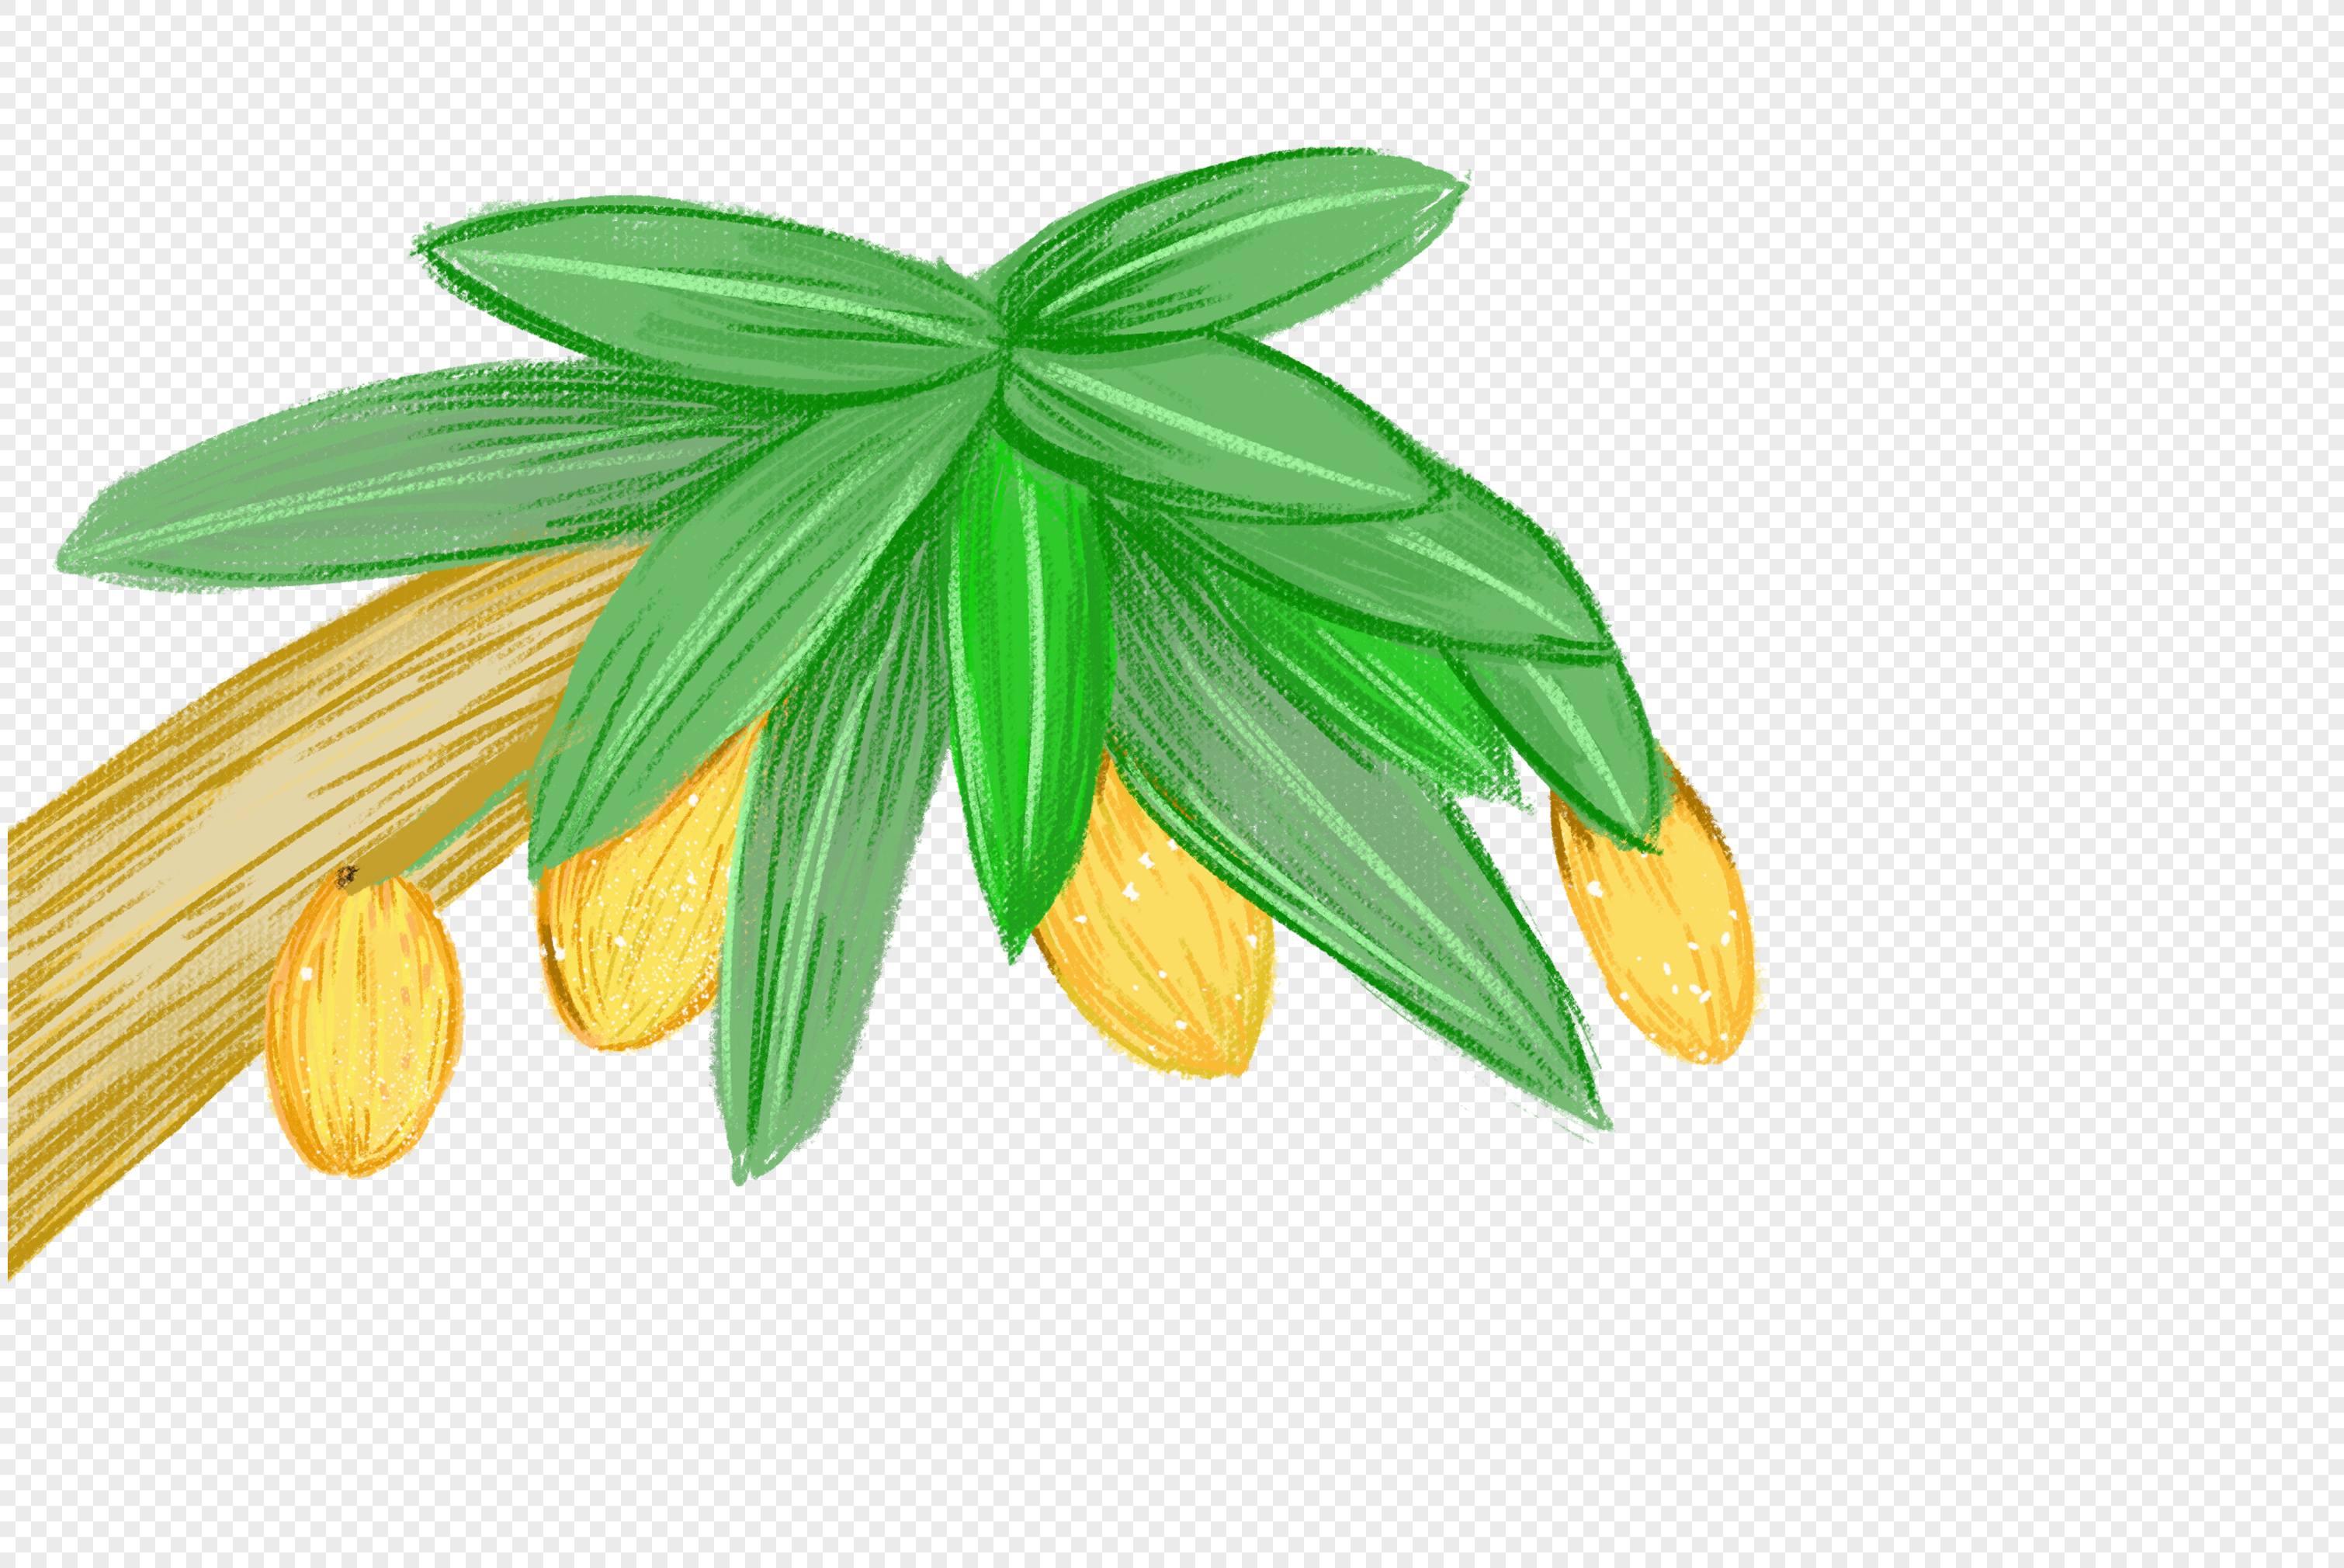 mango tree vector png